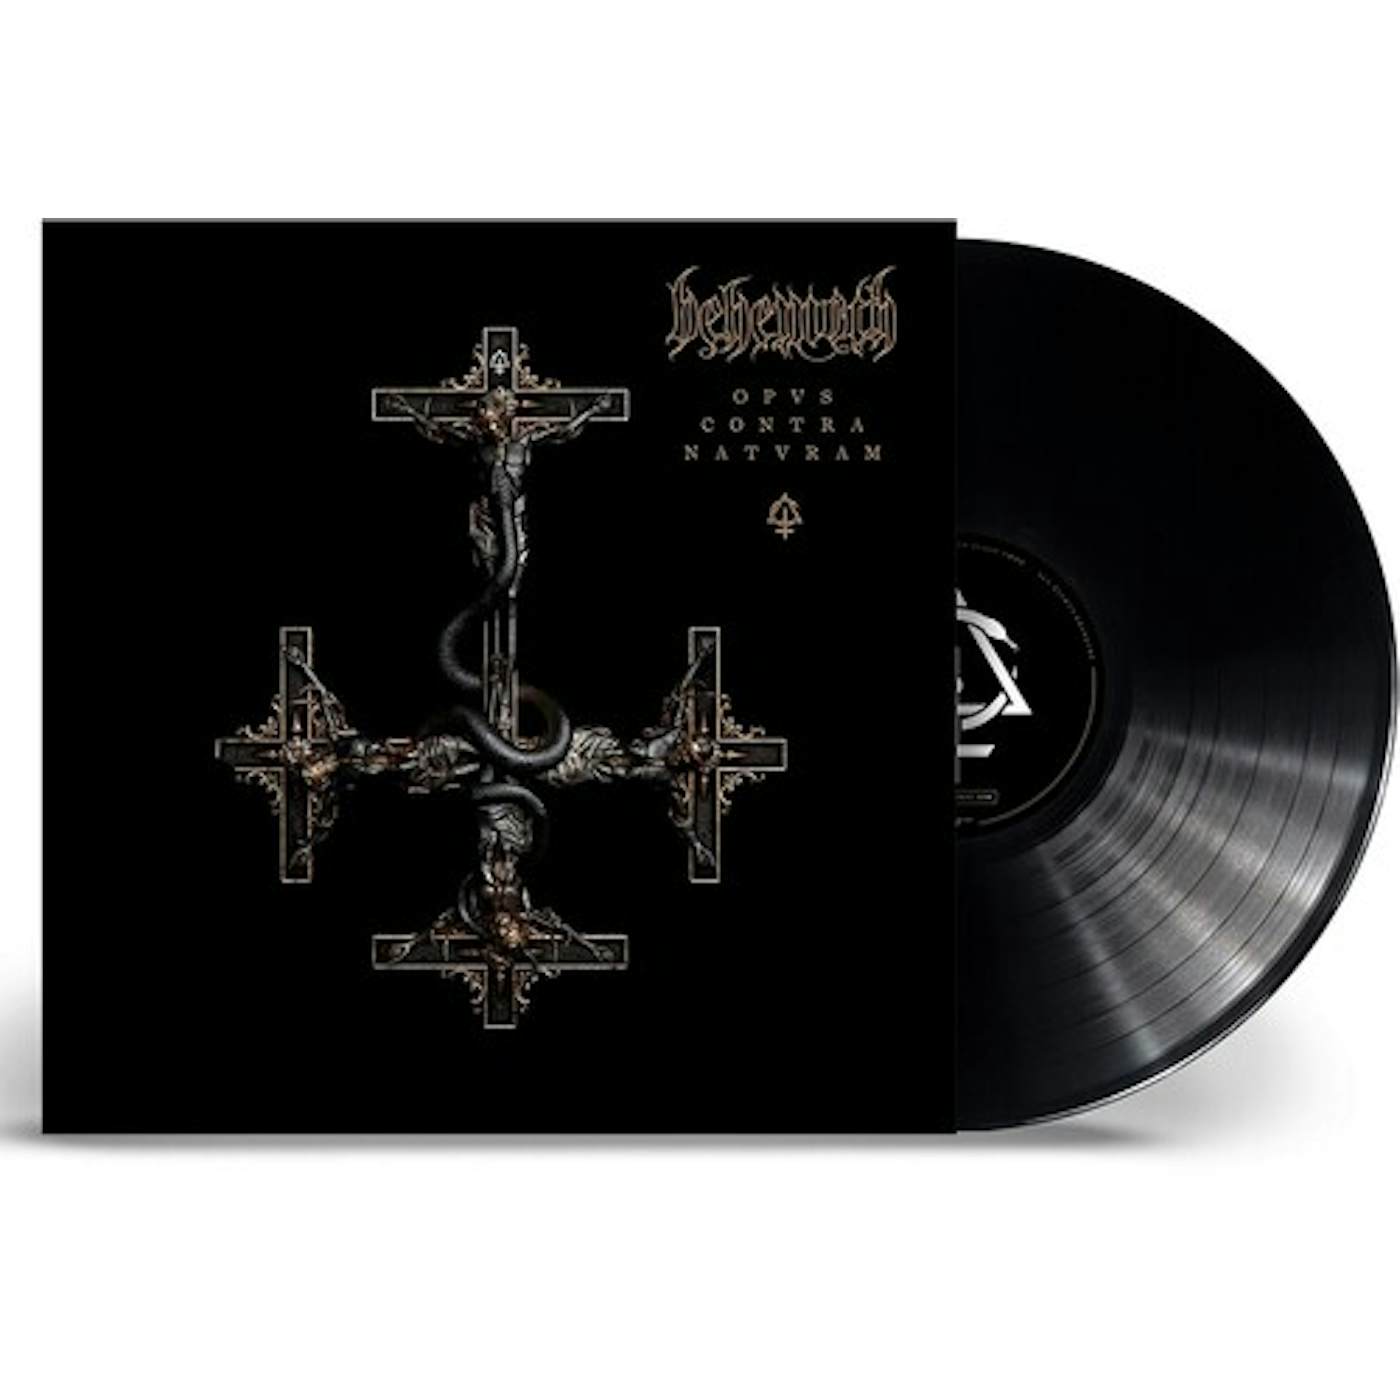 Behemoth Opvs Contra Natvram Vinyl Record